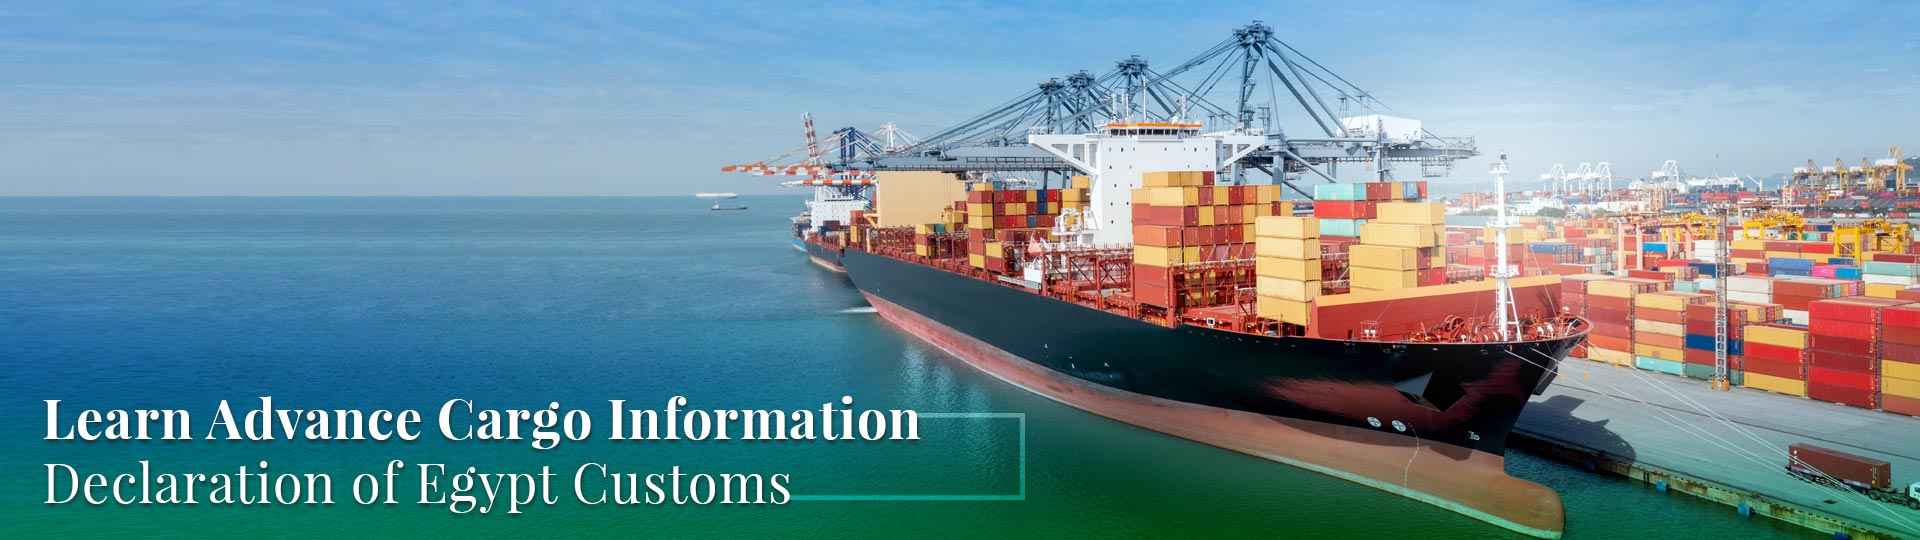 Advance Cargo Information Declaration